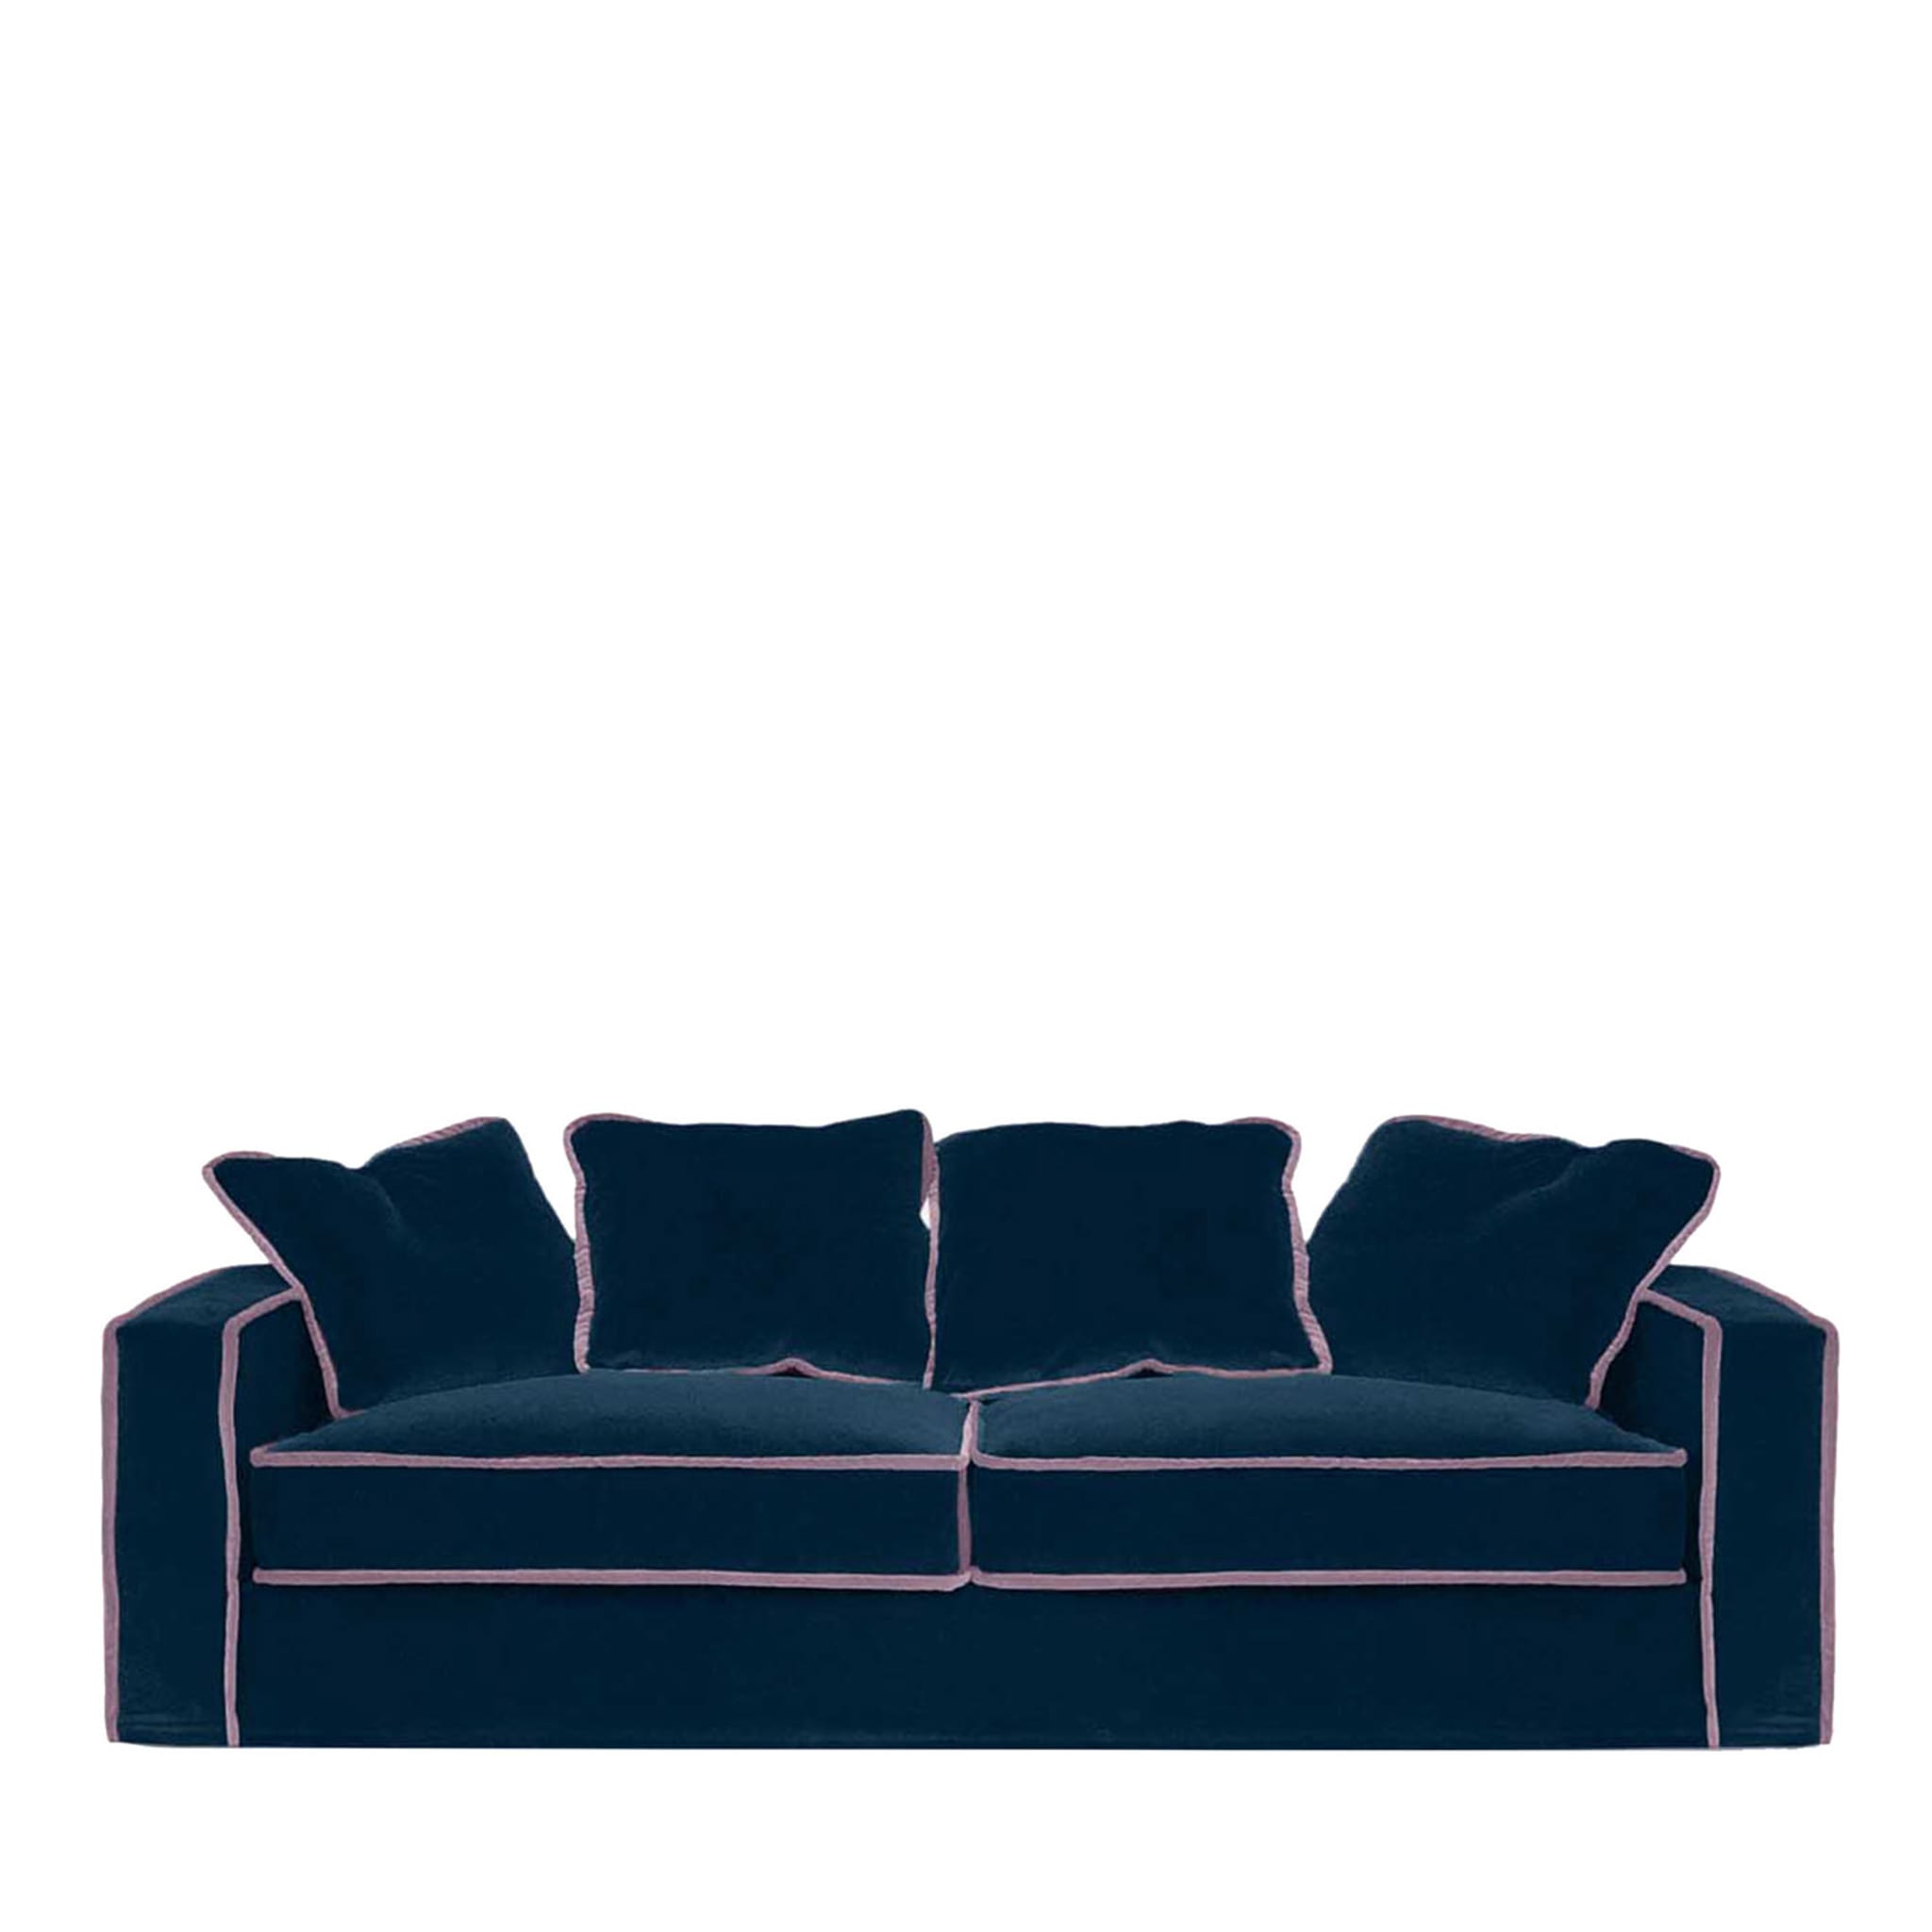 Rafaella Midnight Blue & Pink Velvet 3 Seater Sofa - Main view